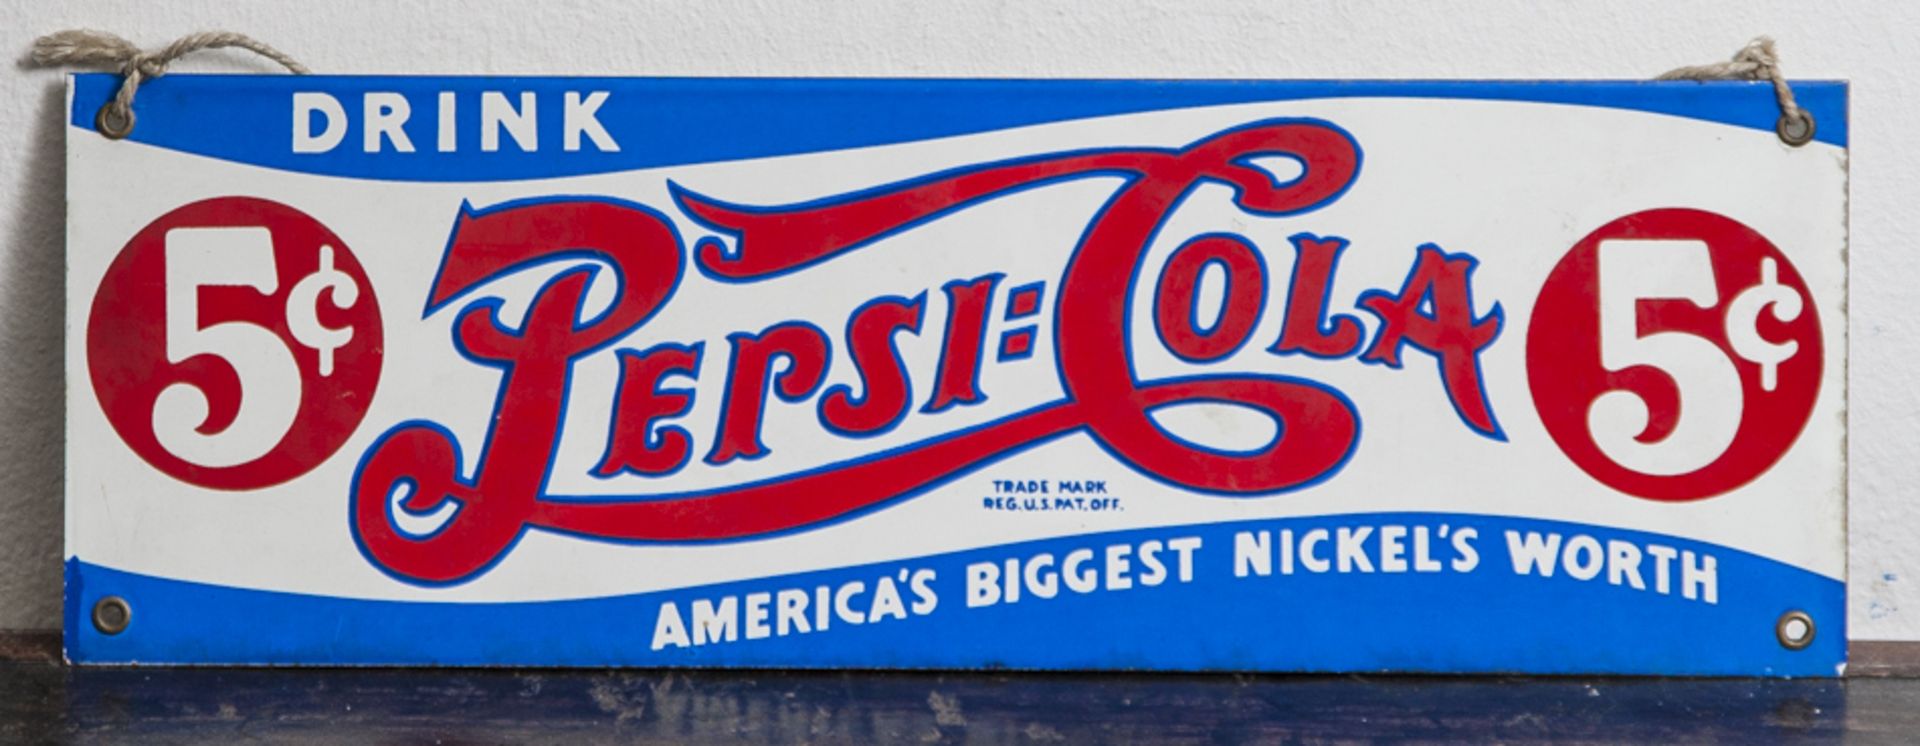 Emailschild, "Drink Pepsi Cola", 5 Cent, America´s Biggest Nickel´s Worth. Ca. 15 x 46 cm.